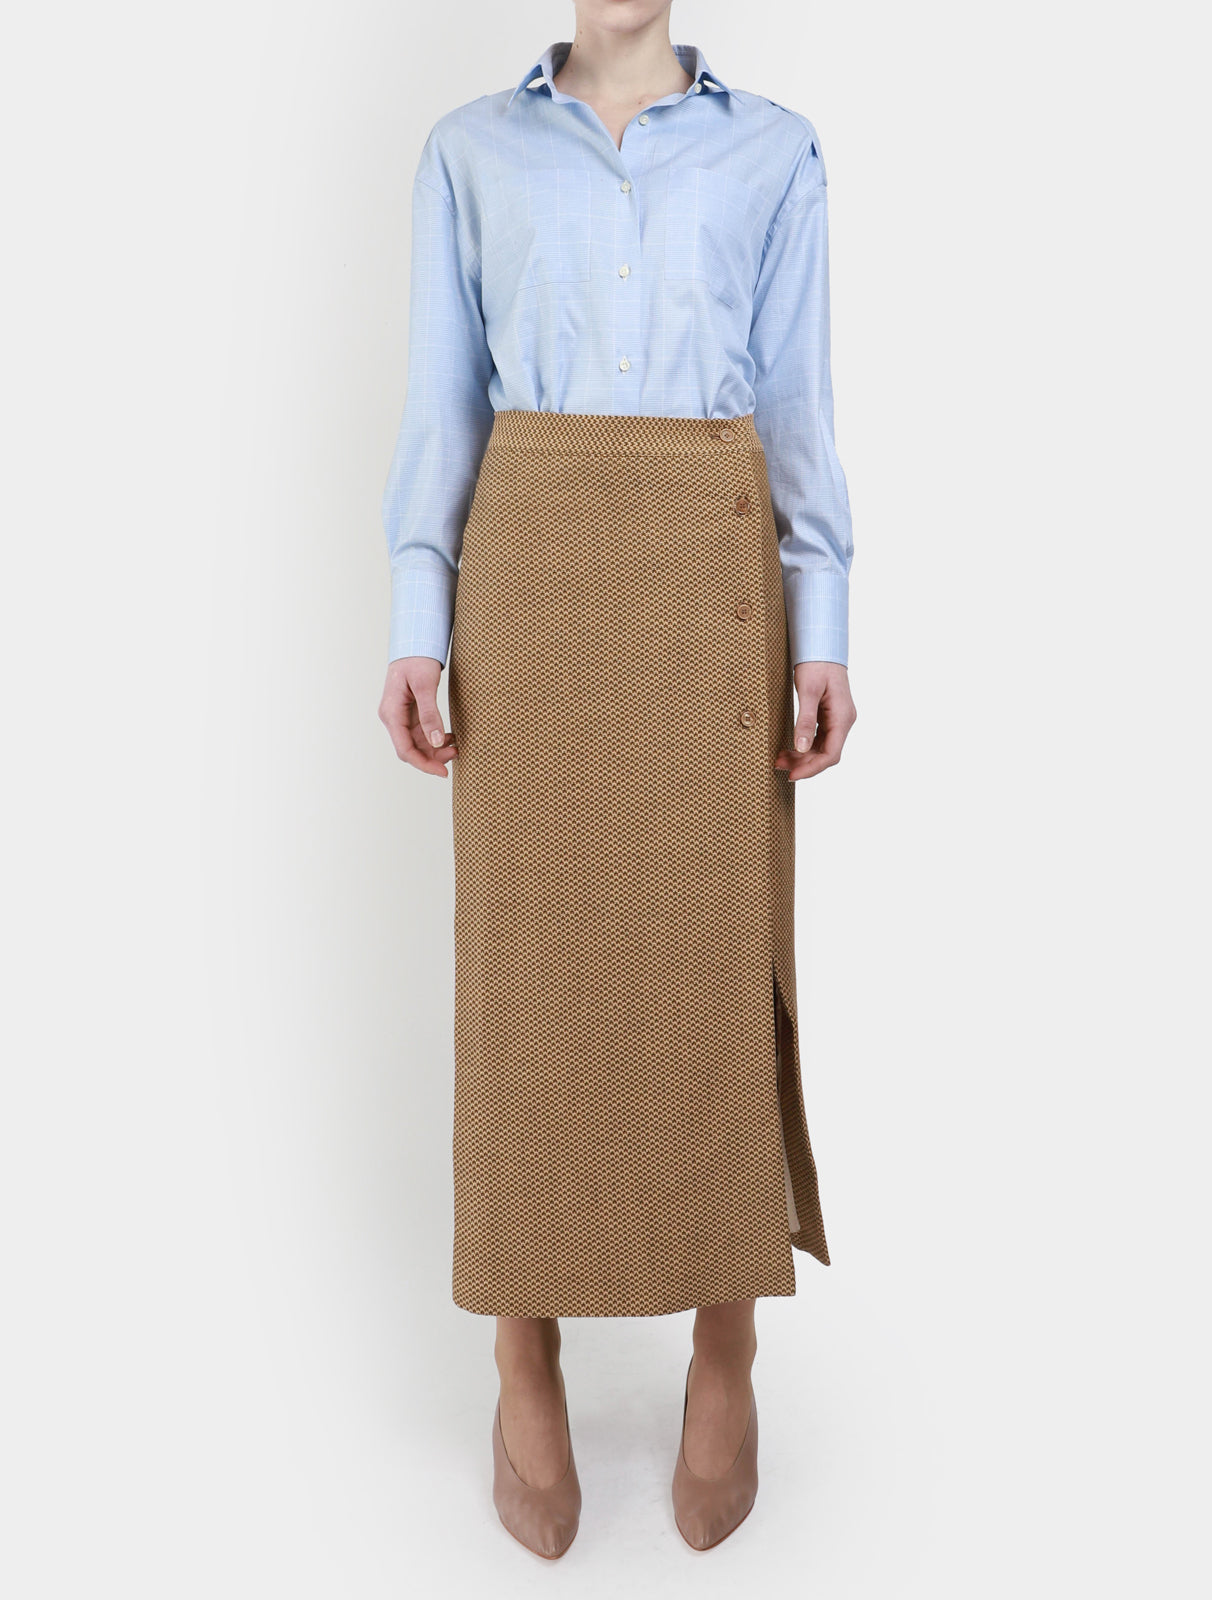 The Sadie Skirt